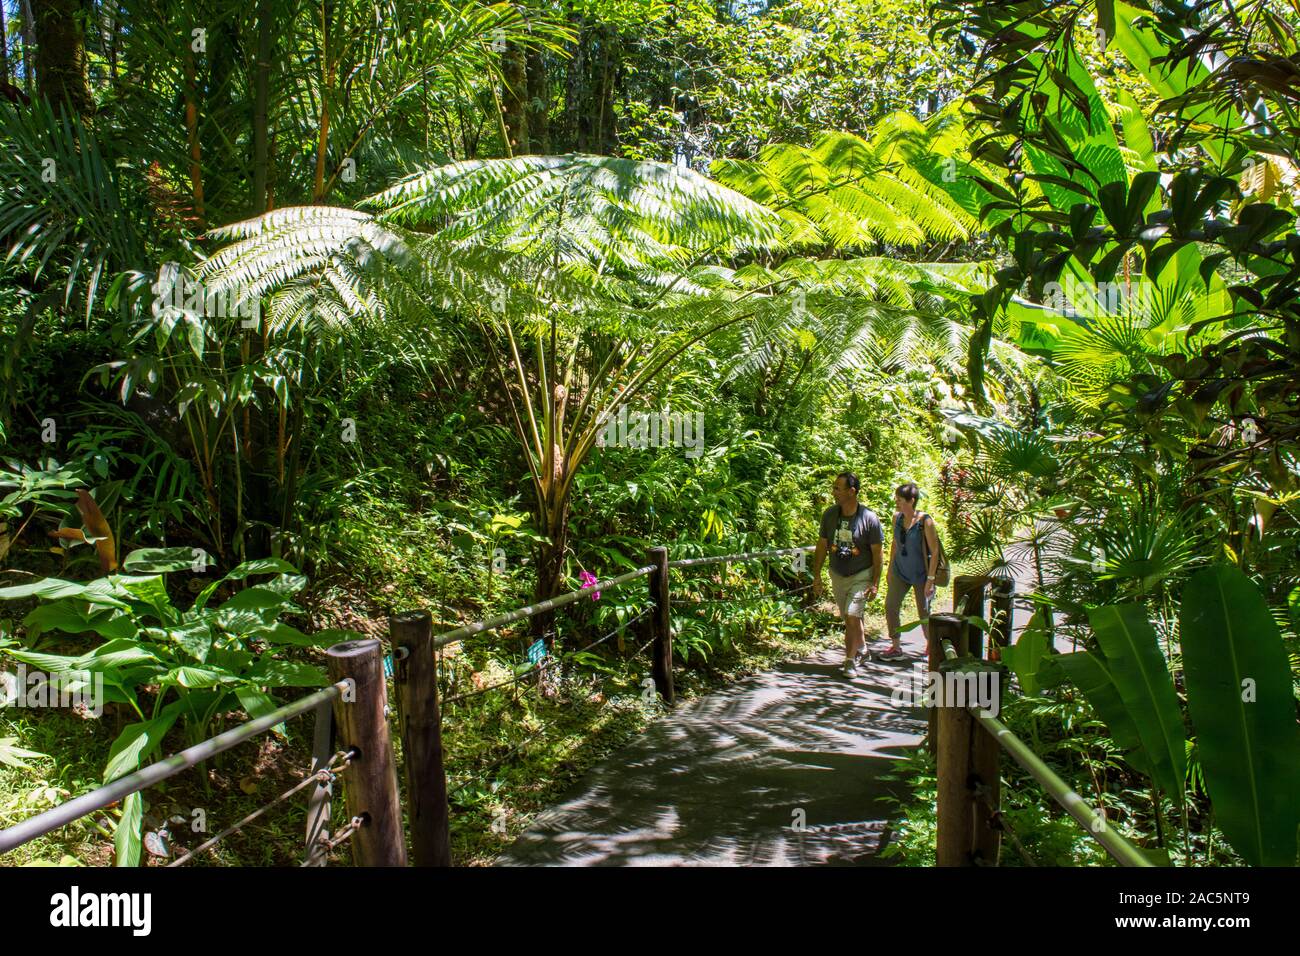 Visitors take in the lush surroundings around the boardwalk at Hawaii Tropical Botanical Garden in Papa'ikou near Hilo, Big Island of Hawai'i. Stock Photo